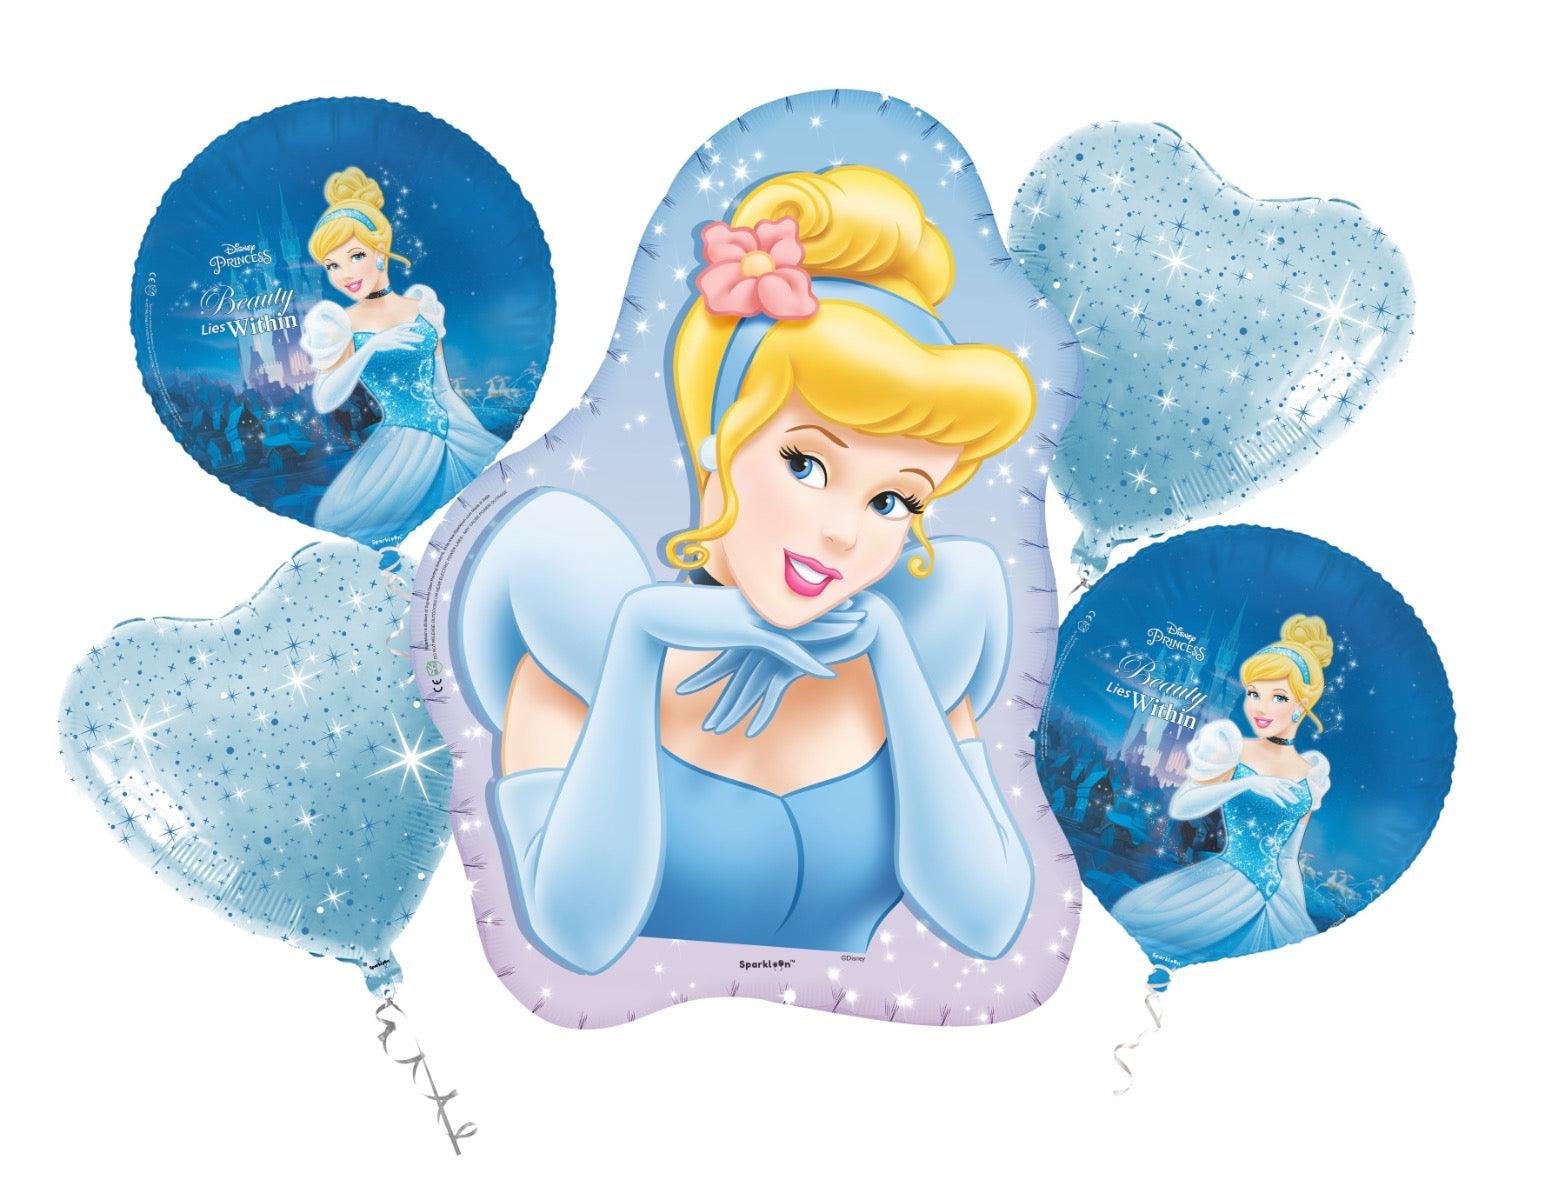 Disney Princess Cinderella Set, Pack of 5 Foil Balloons - 2 Round, 1 Mini Cutout and 2 Heart